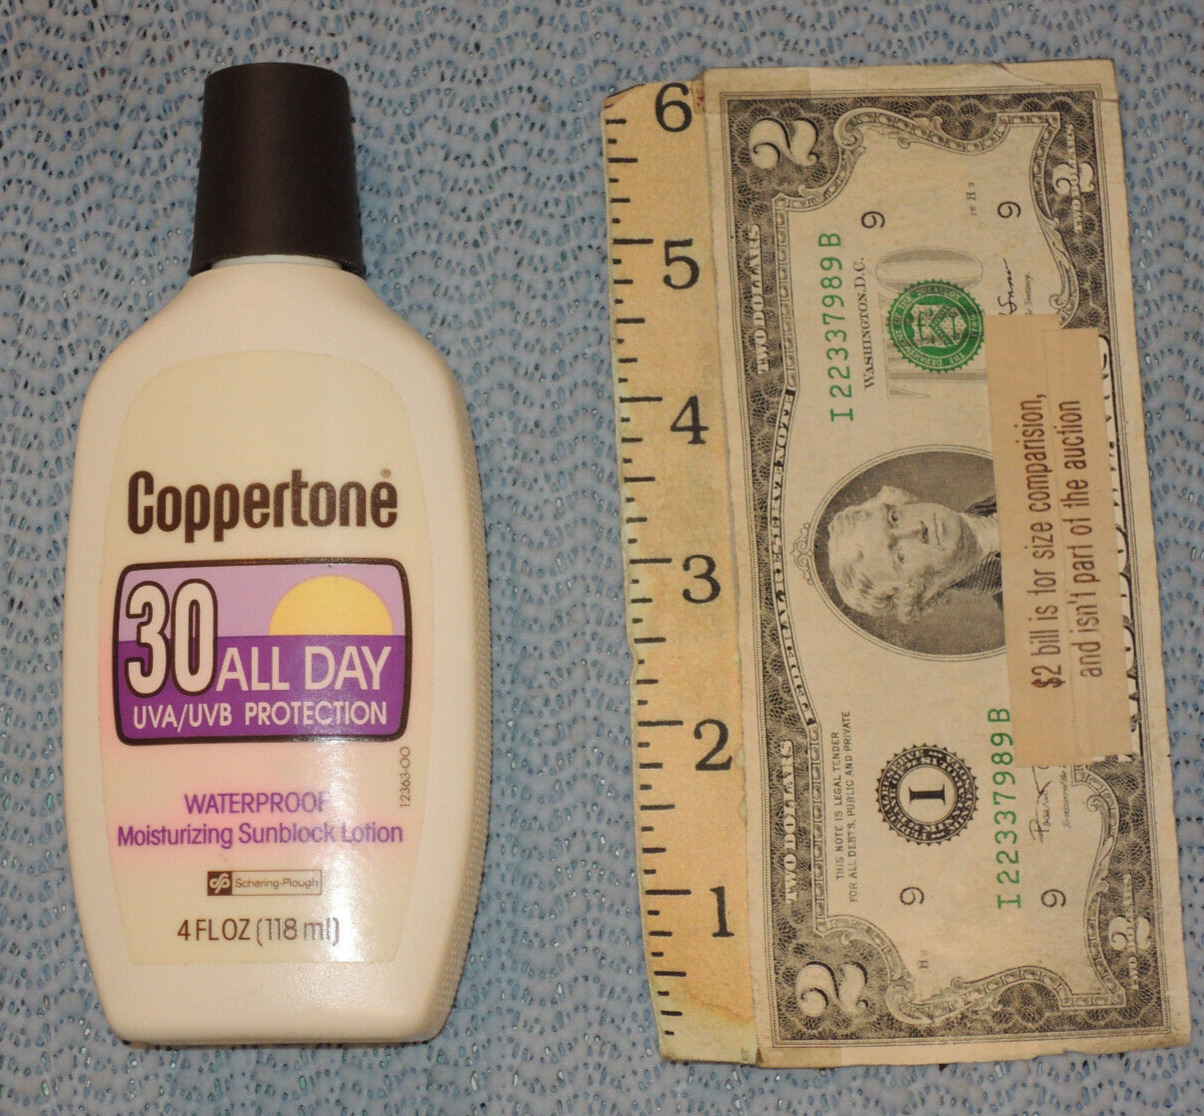 Vintage Coppertone Sunblock Lotion 30 ALL DAY. 4oz bottle. 3/4 Full. Movie prop.